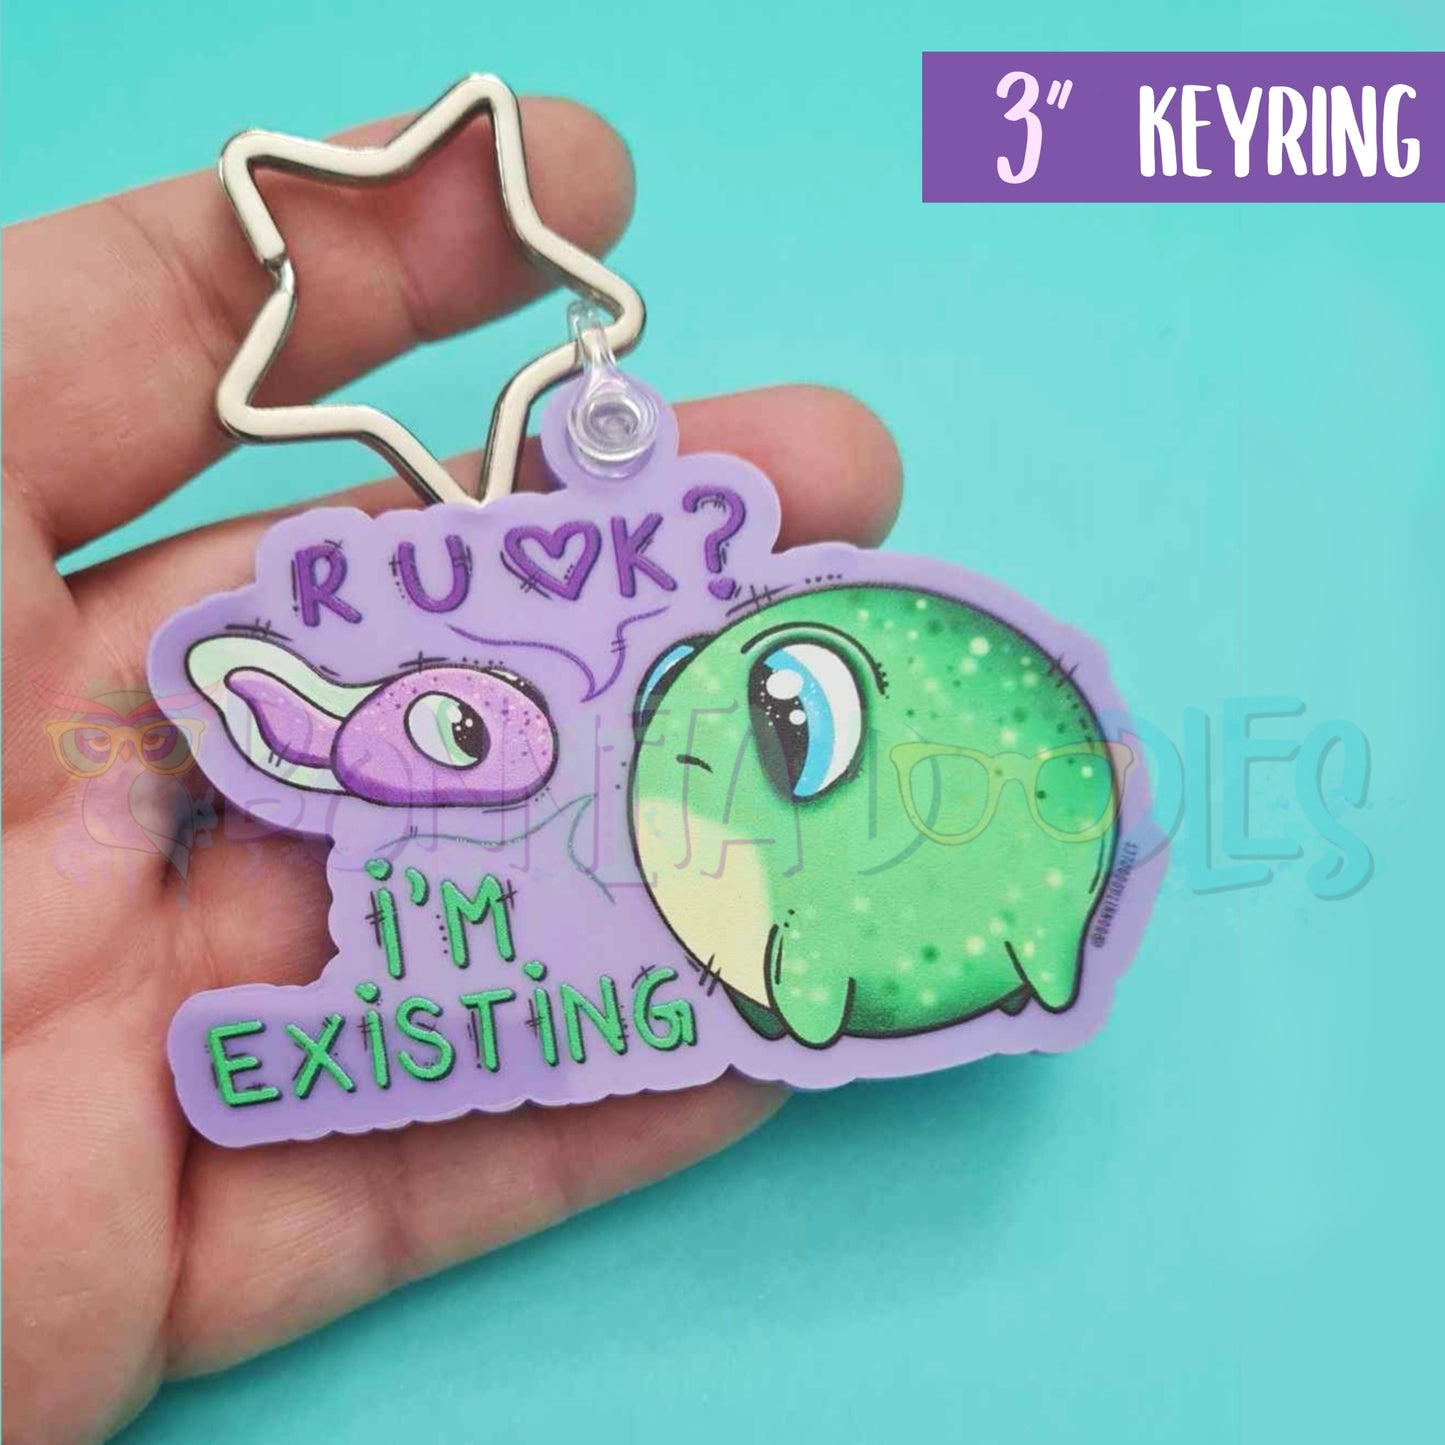 R u ok, I exist frog & tadpole keychain.